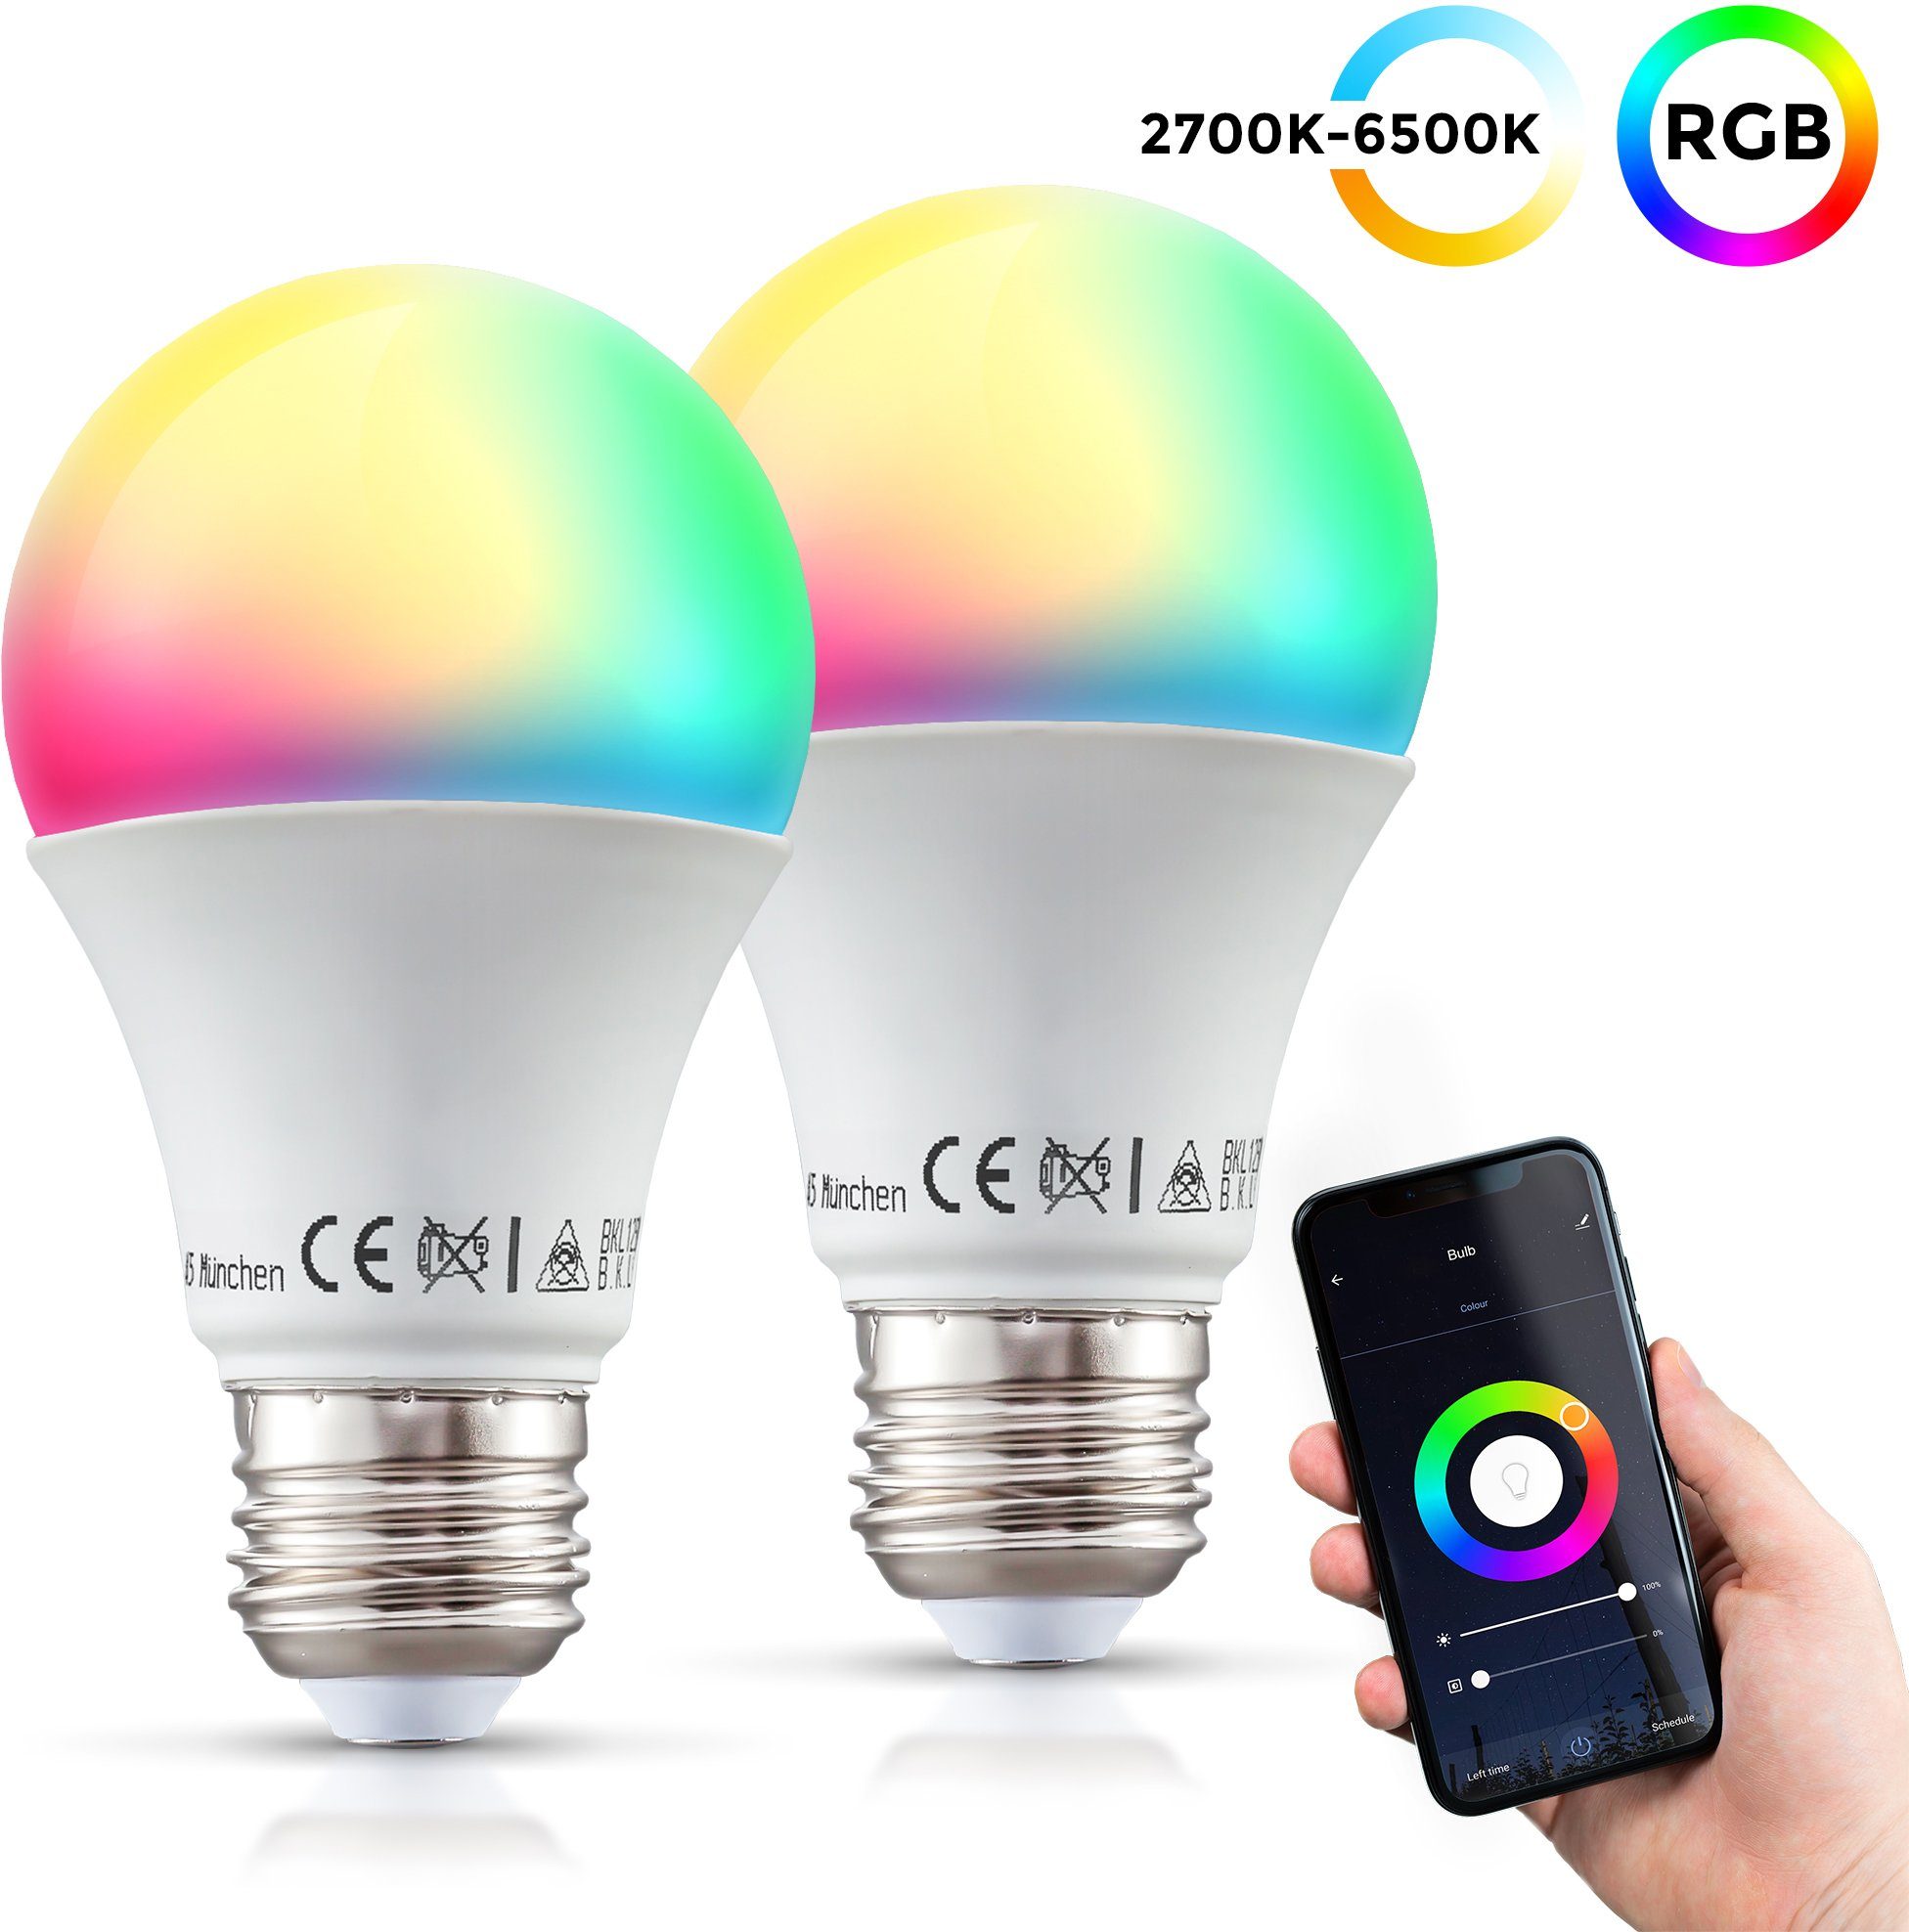 LED-Leuchtmittel, 2 RGB, St., dimmbar LED-Lampe, E27, App-Steuerung, Warmweiß, Smart B.K.Licht Home WiFi,